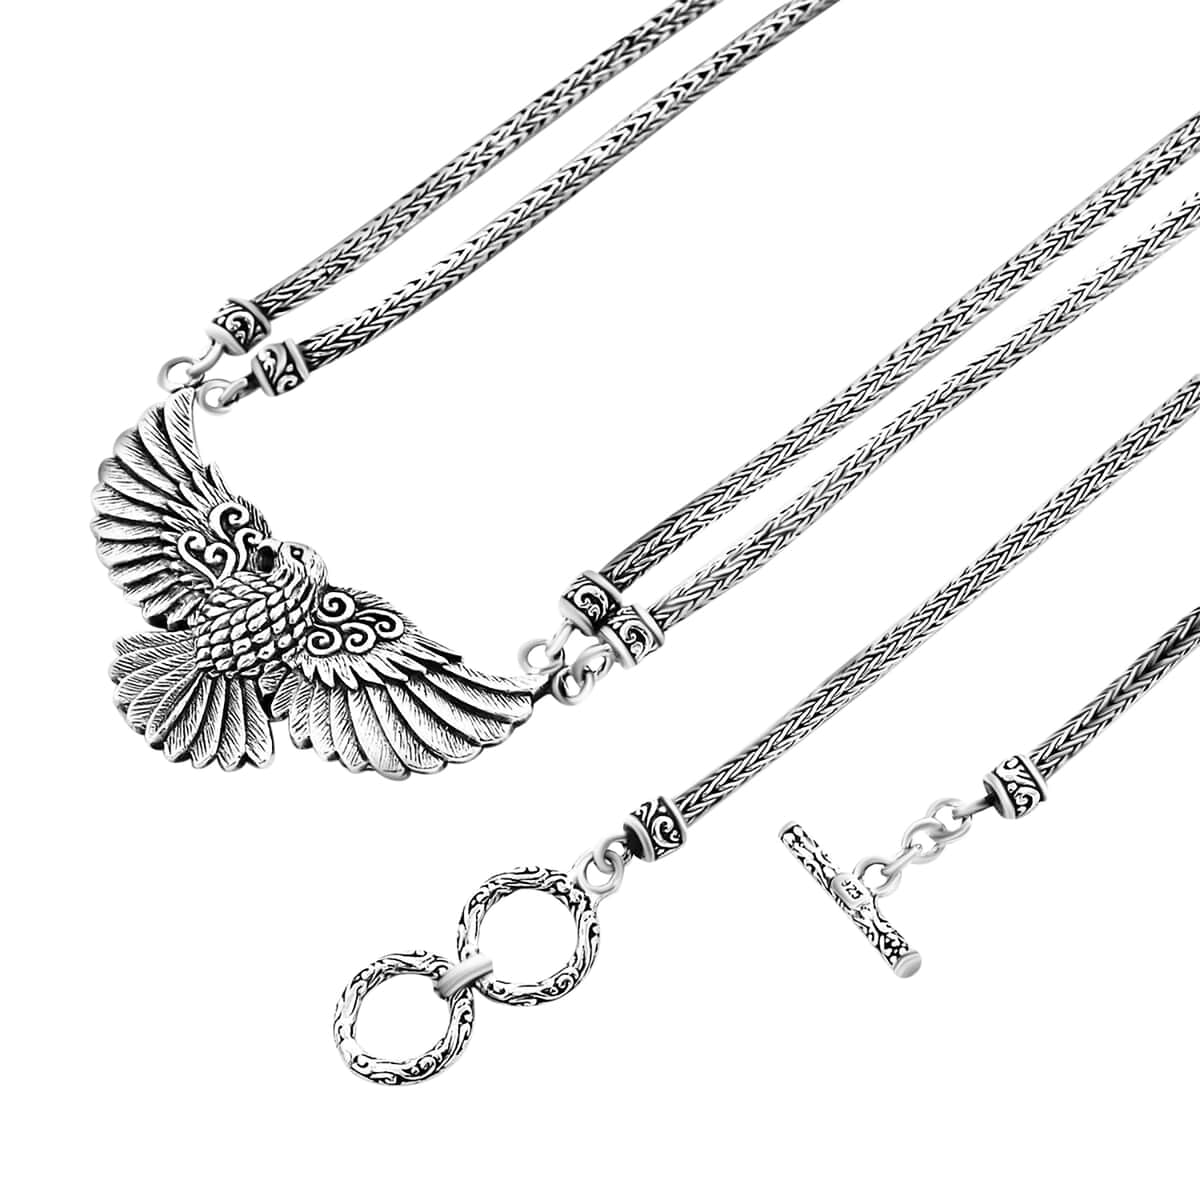 Bali Legacy Eagle Necklace, Sterling Silver Necklace, Toggle Clasp Necklace, 20-21 Inch Necklace 39 Grams image number 5